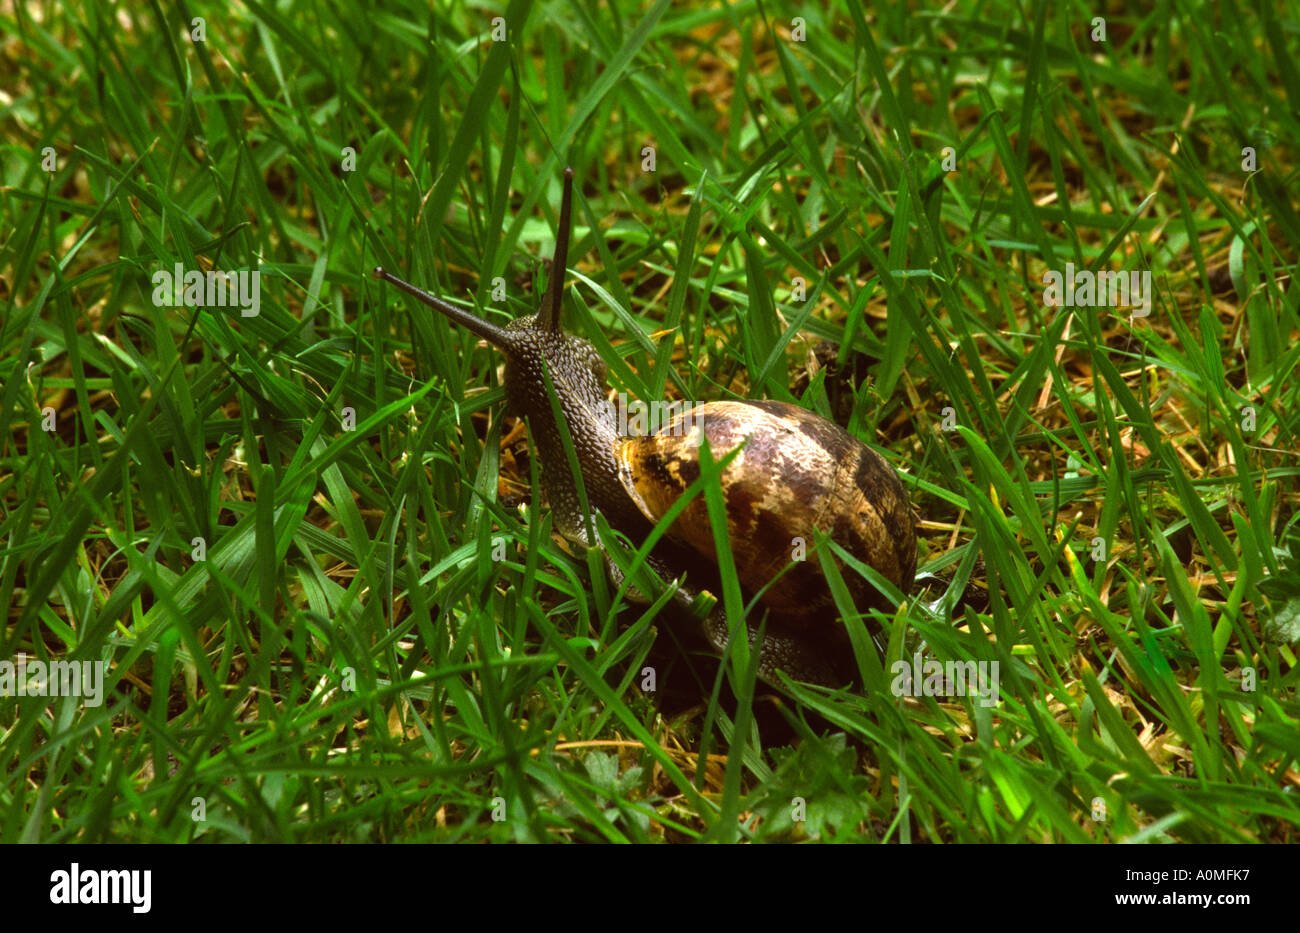 Gardening Garden pests snail on lawn Stock Photo